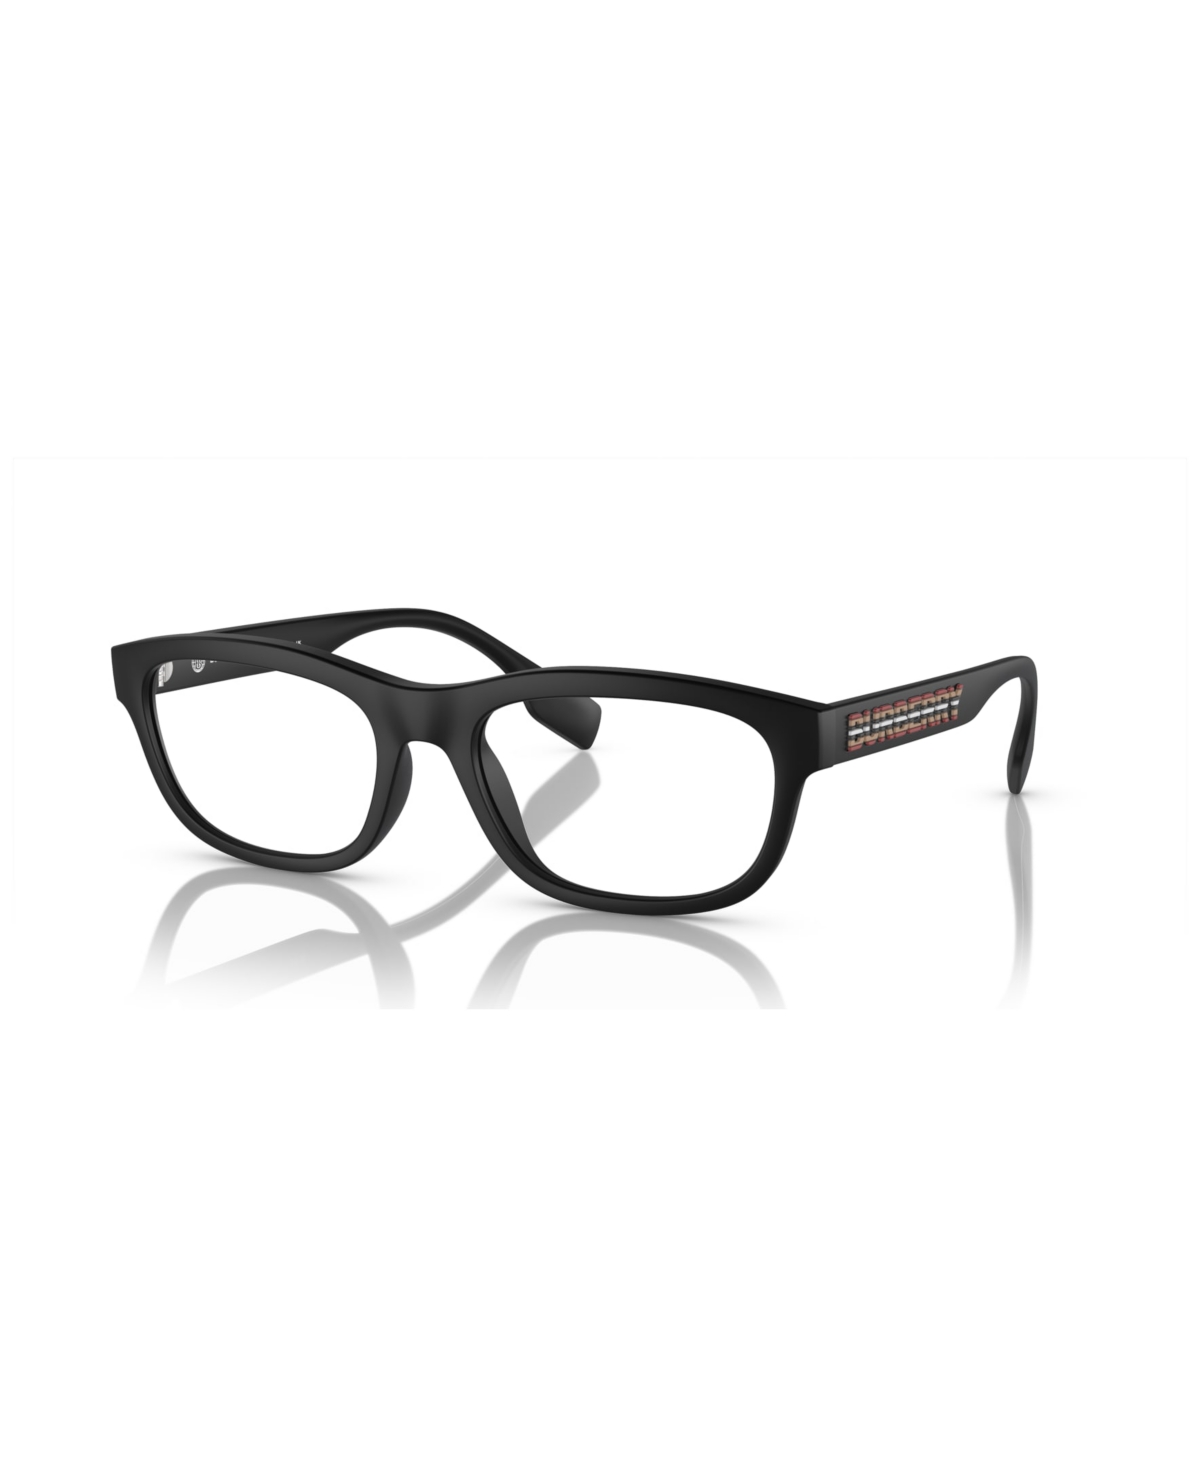 Men's Eyeglasses, BE2385U - Matte Black